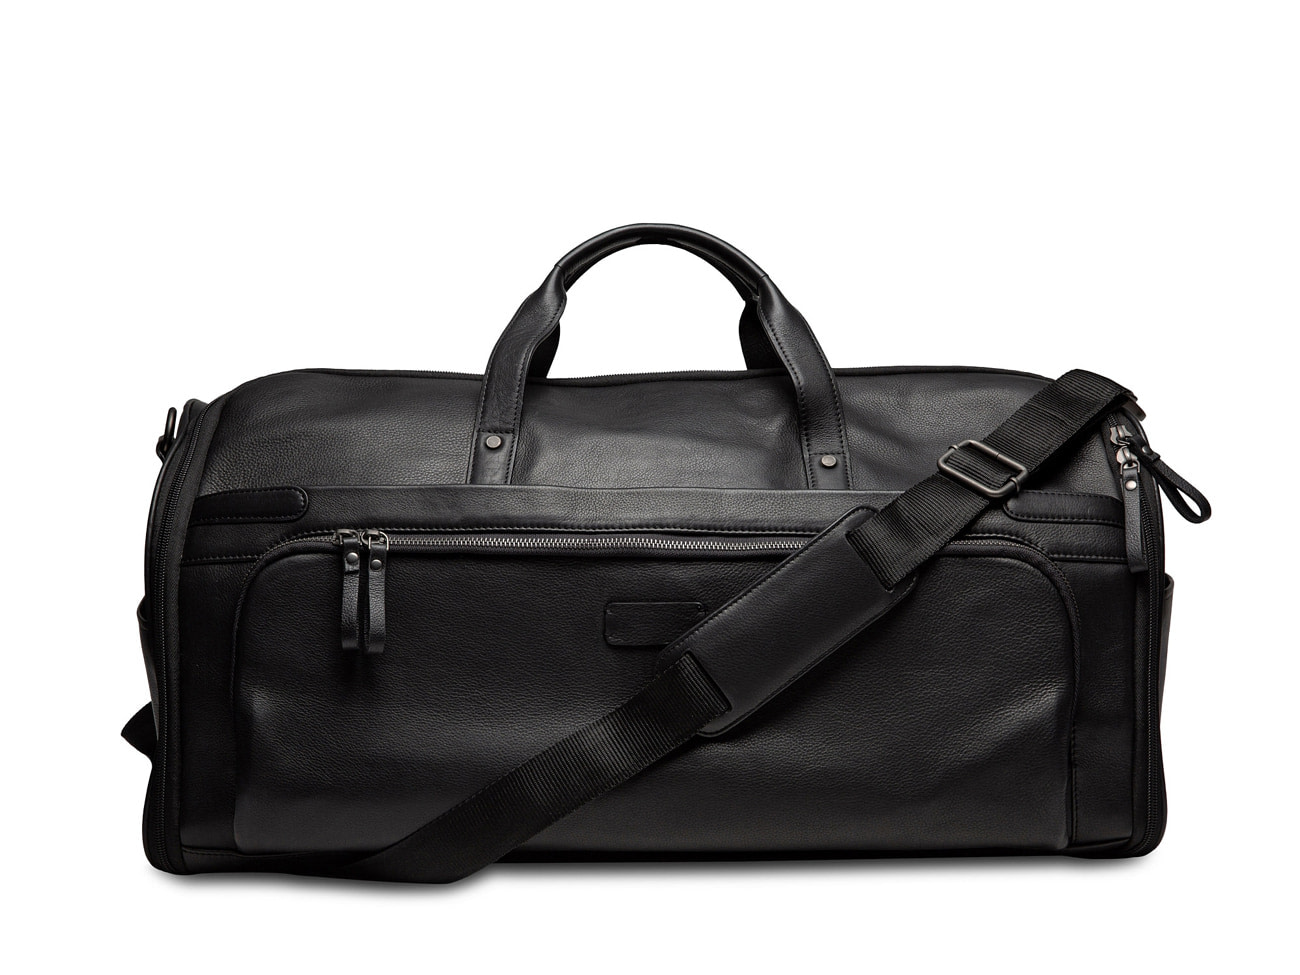 7 Elegant Leather Garment Bags for Formal Travel